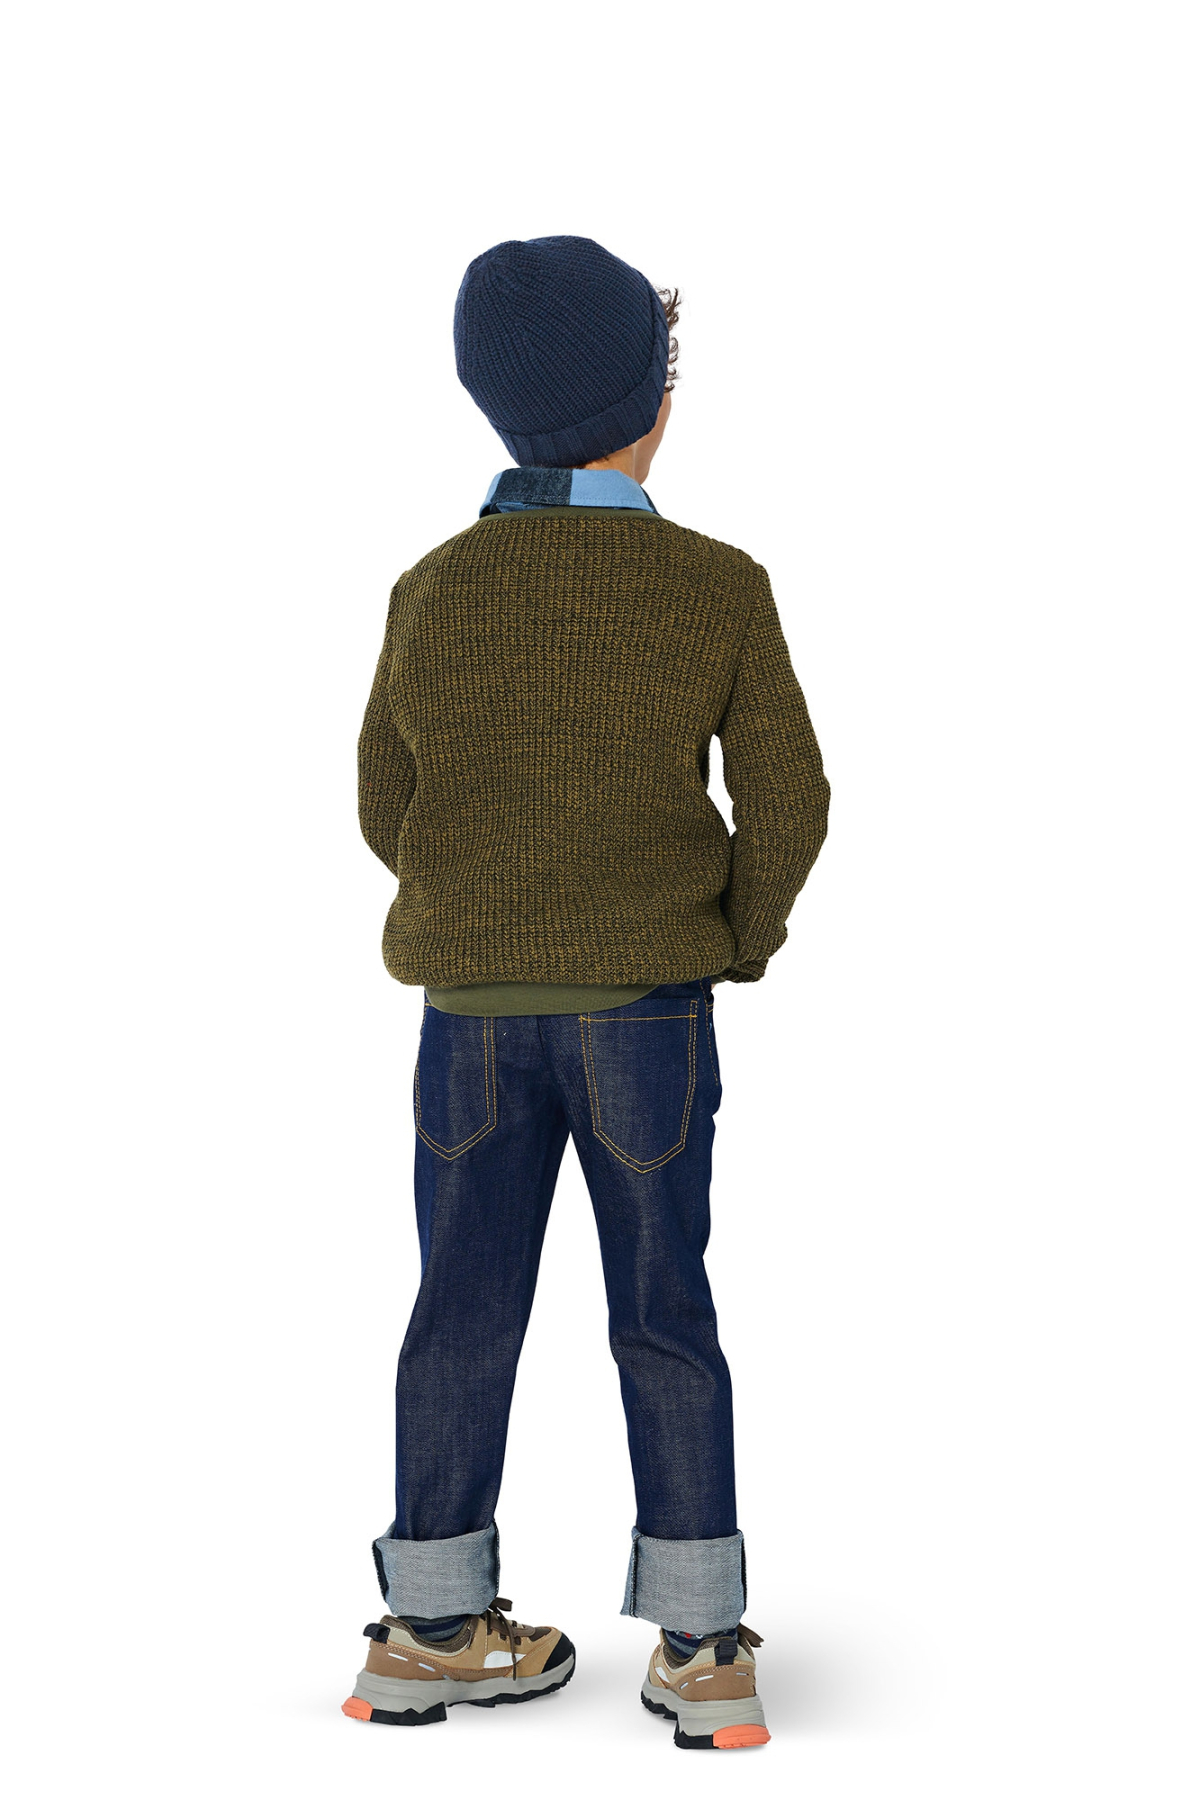 Tuto myboshi bonnet enfant denim au tricot